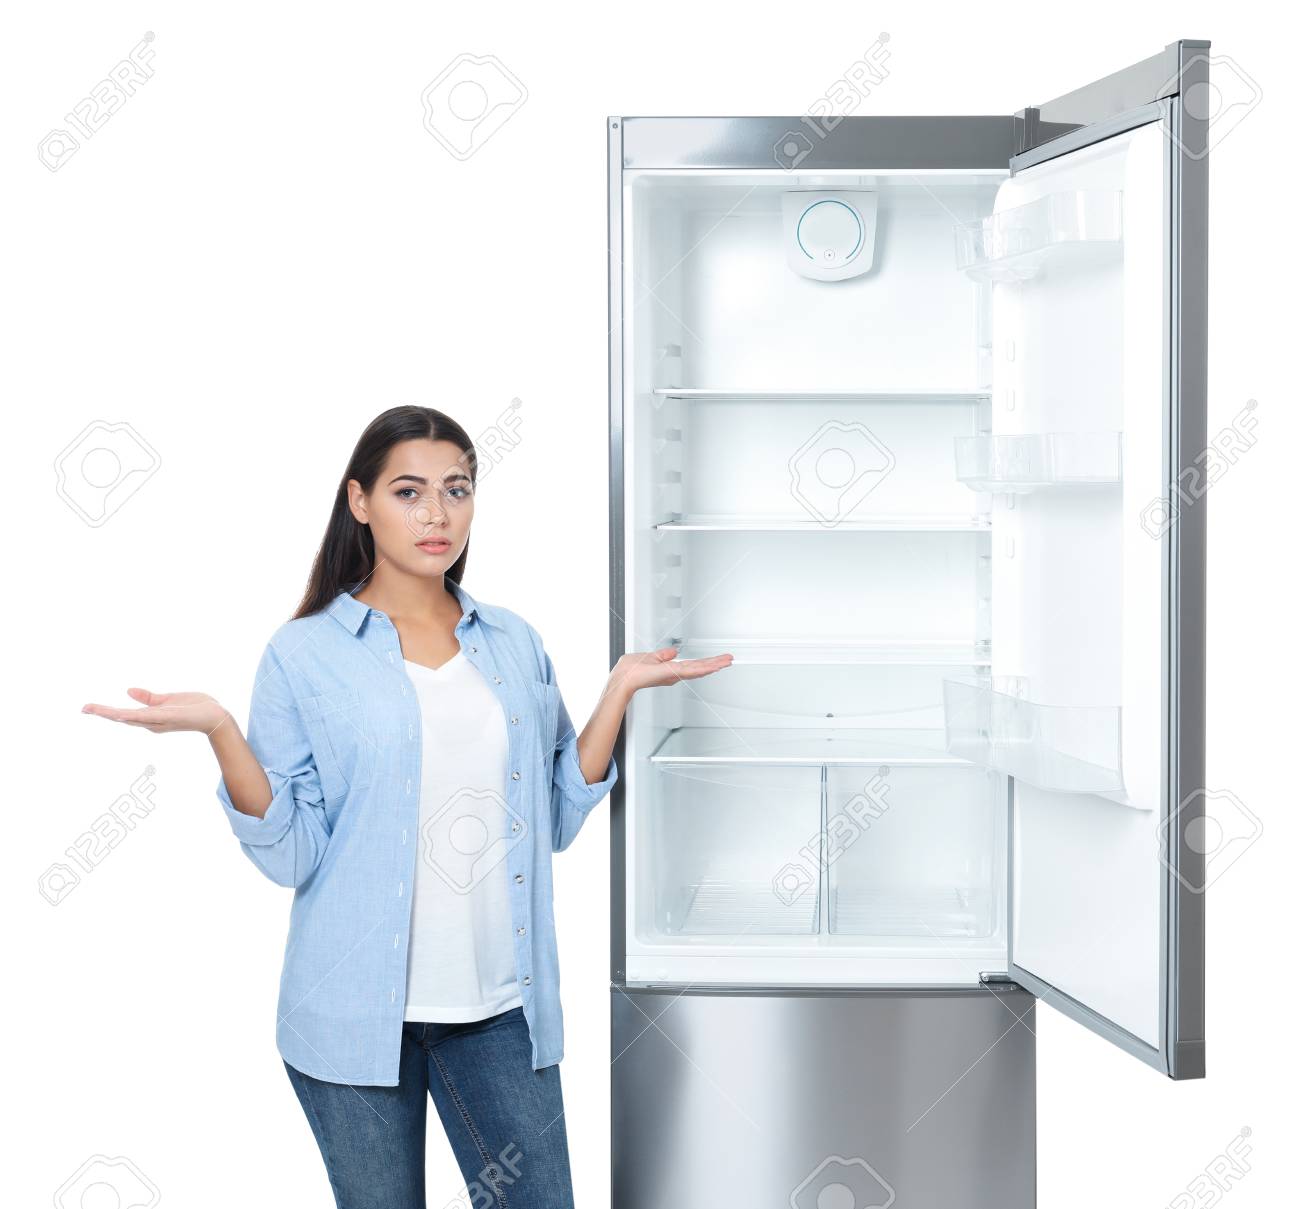 Emotional Woman Near Empty Refrigerator On White Background Stock